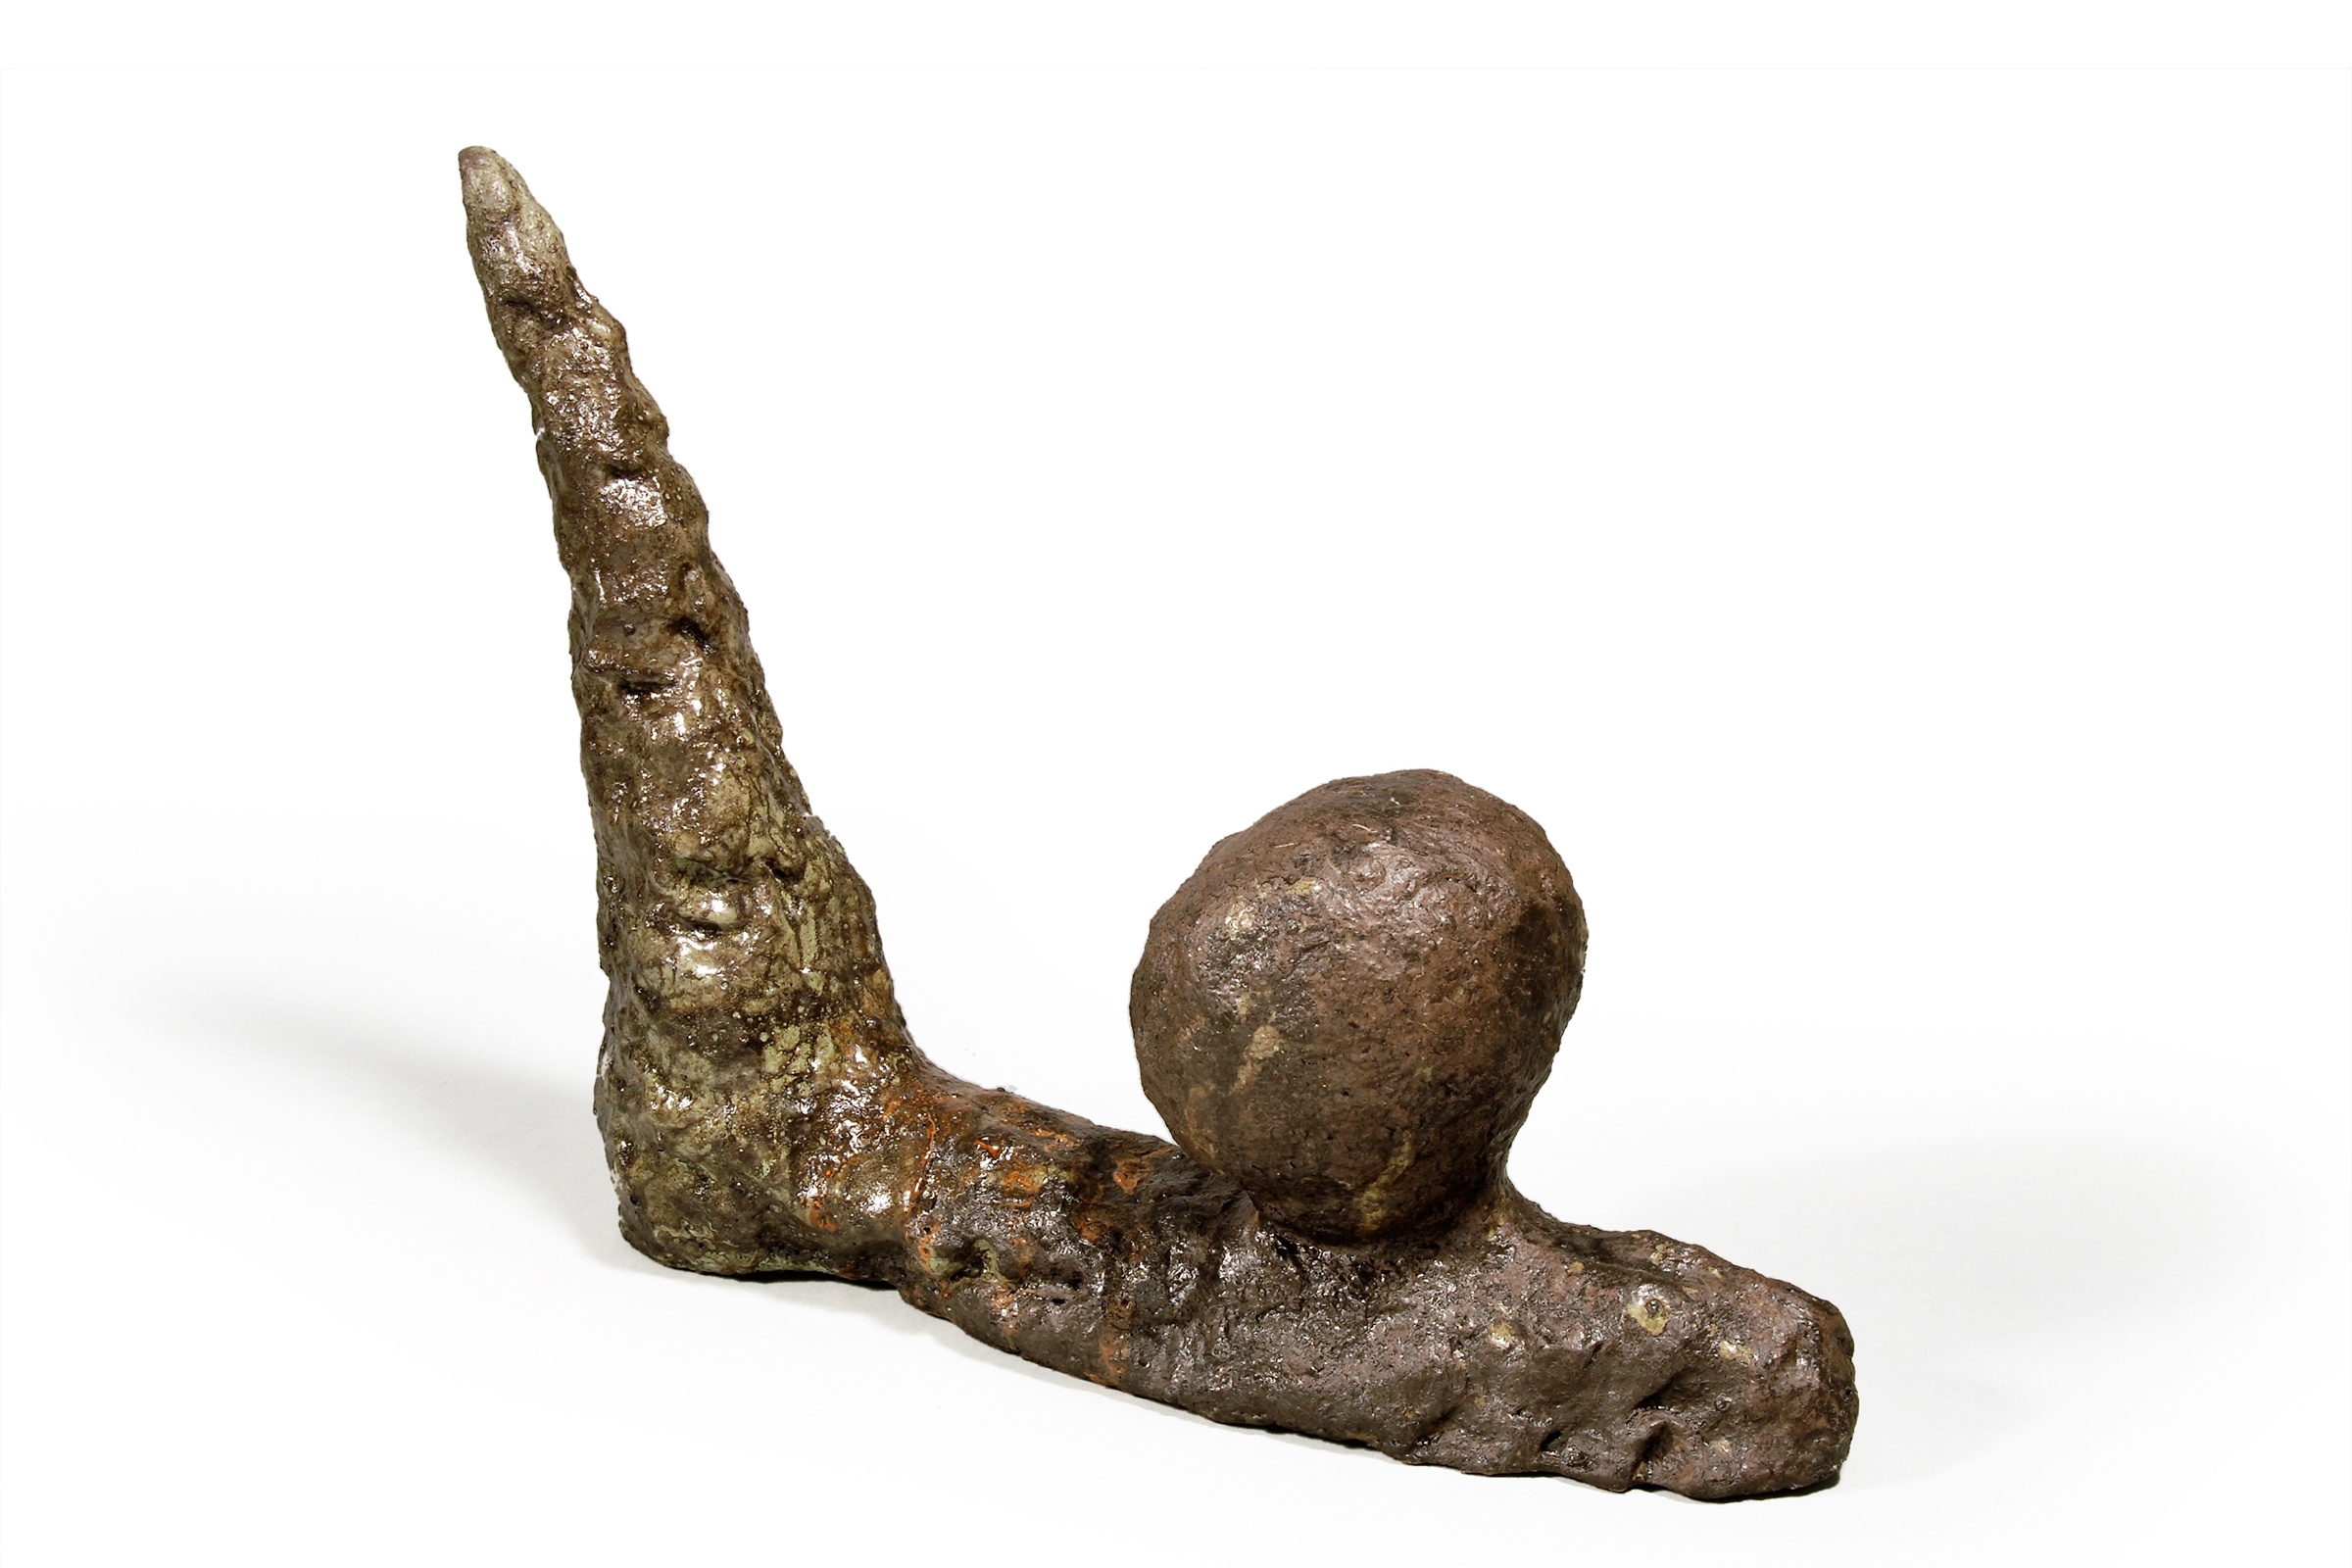 Klaus-Lehmann – 2012-16-002, untitled – Gallery Metzger – sculpture ceramic Collect 2019 Saatchi gallery